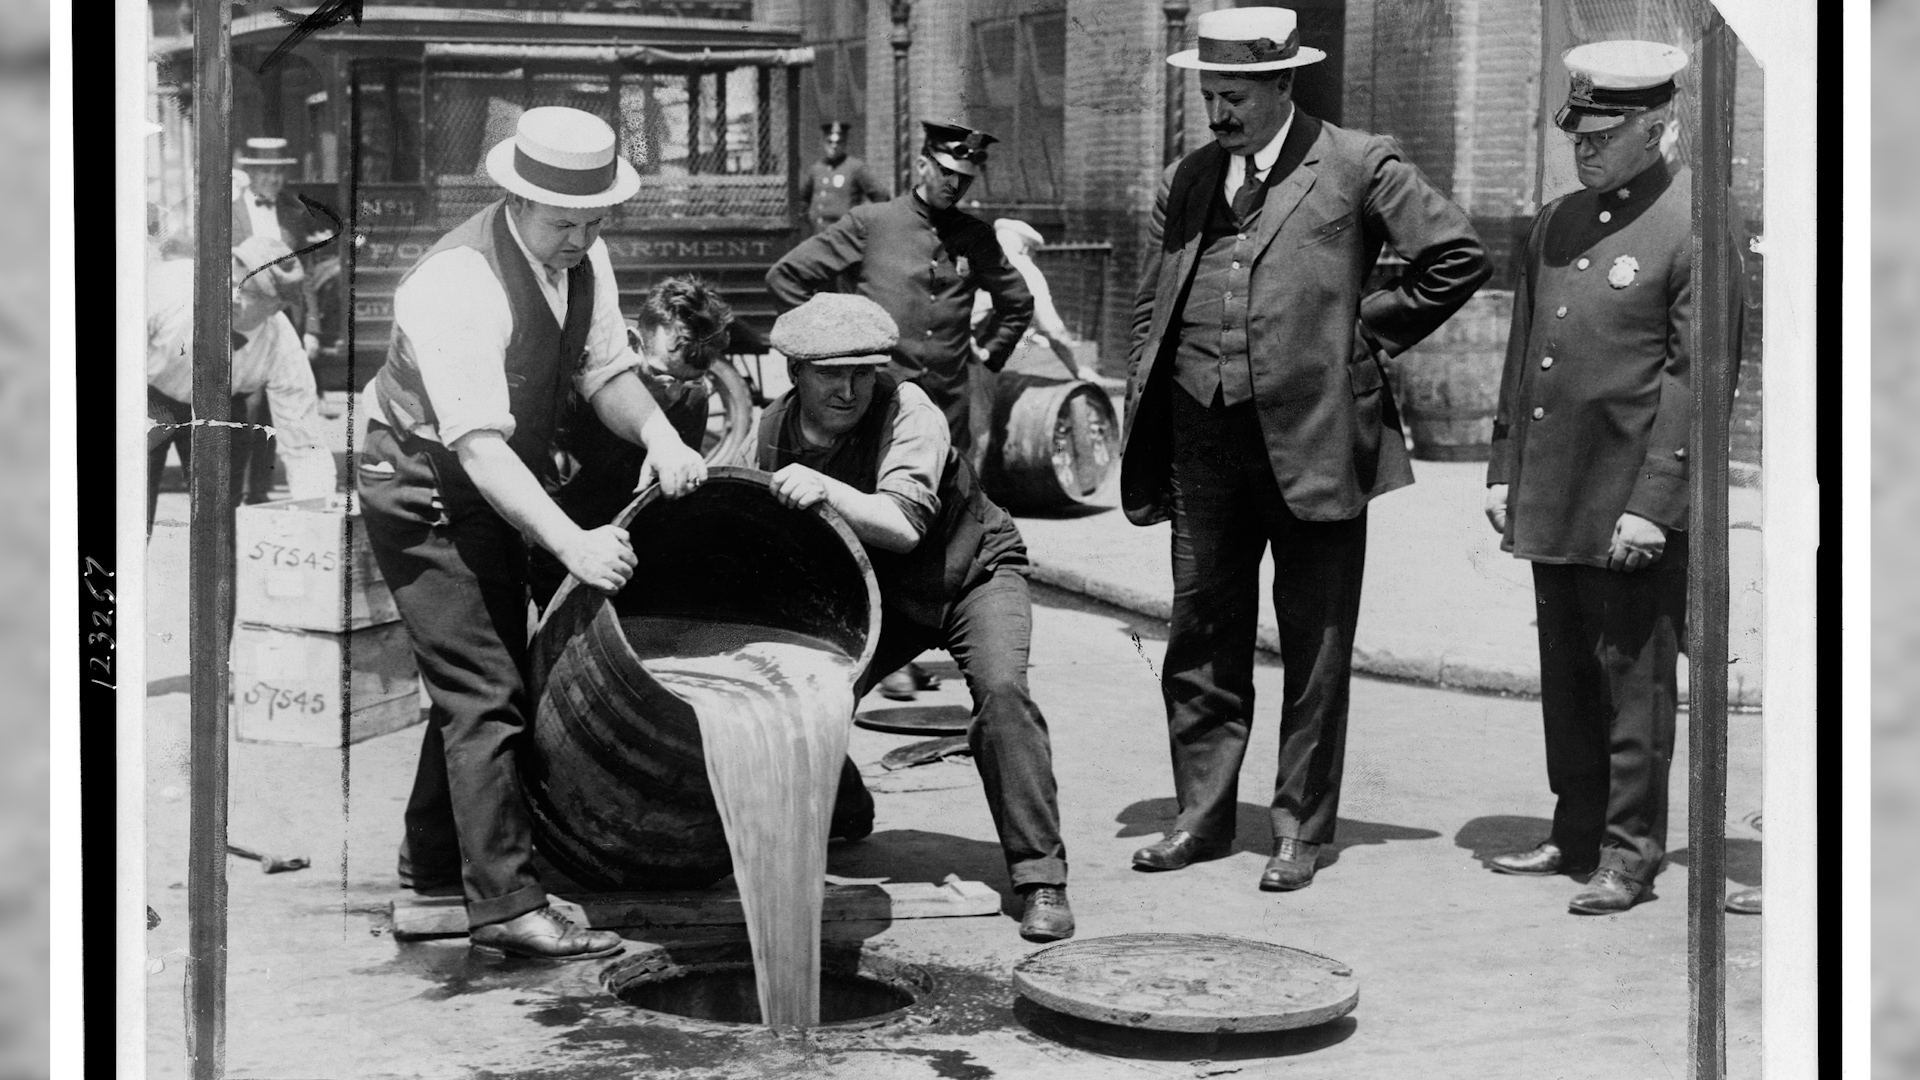 حظر الخمور في الولايات المتحدة الأمريكية. New York City Deputy Police Commissioner John Leach watching agents pour liquor into sewer following a raid during the height of prohibition 1920-1933 Photo Wikipedia.jpg